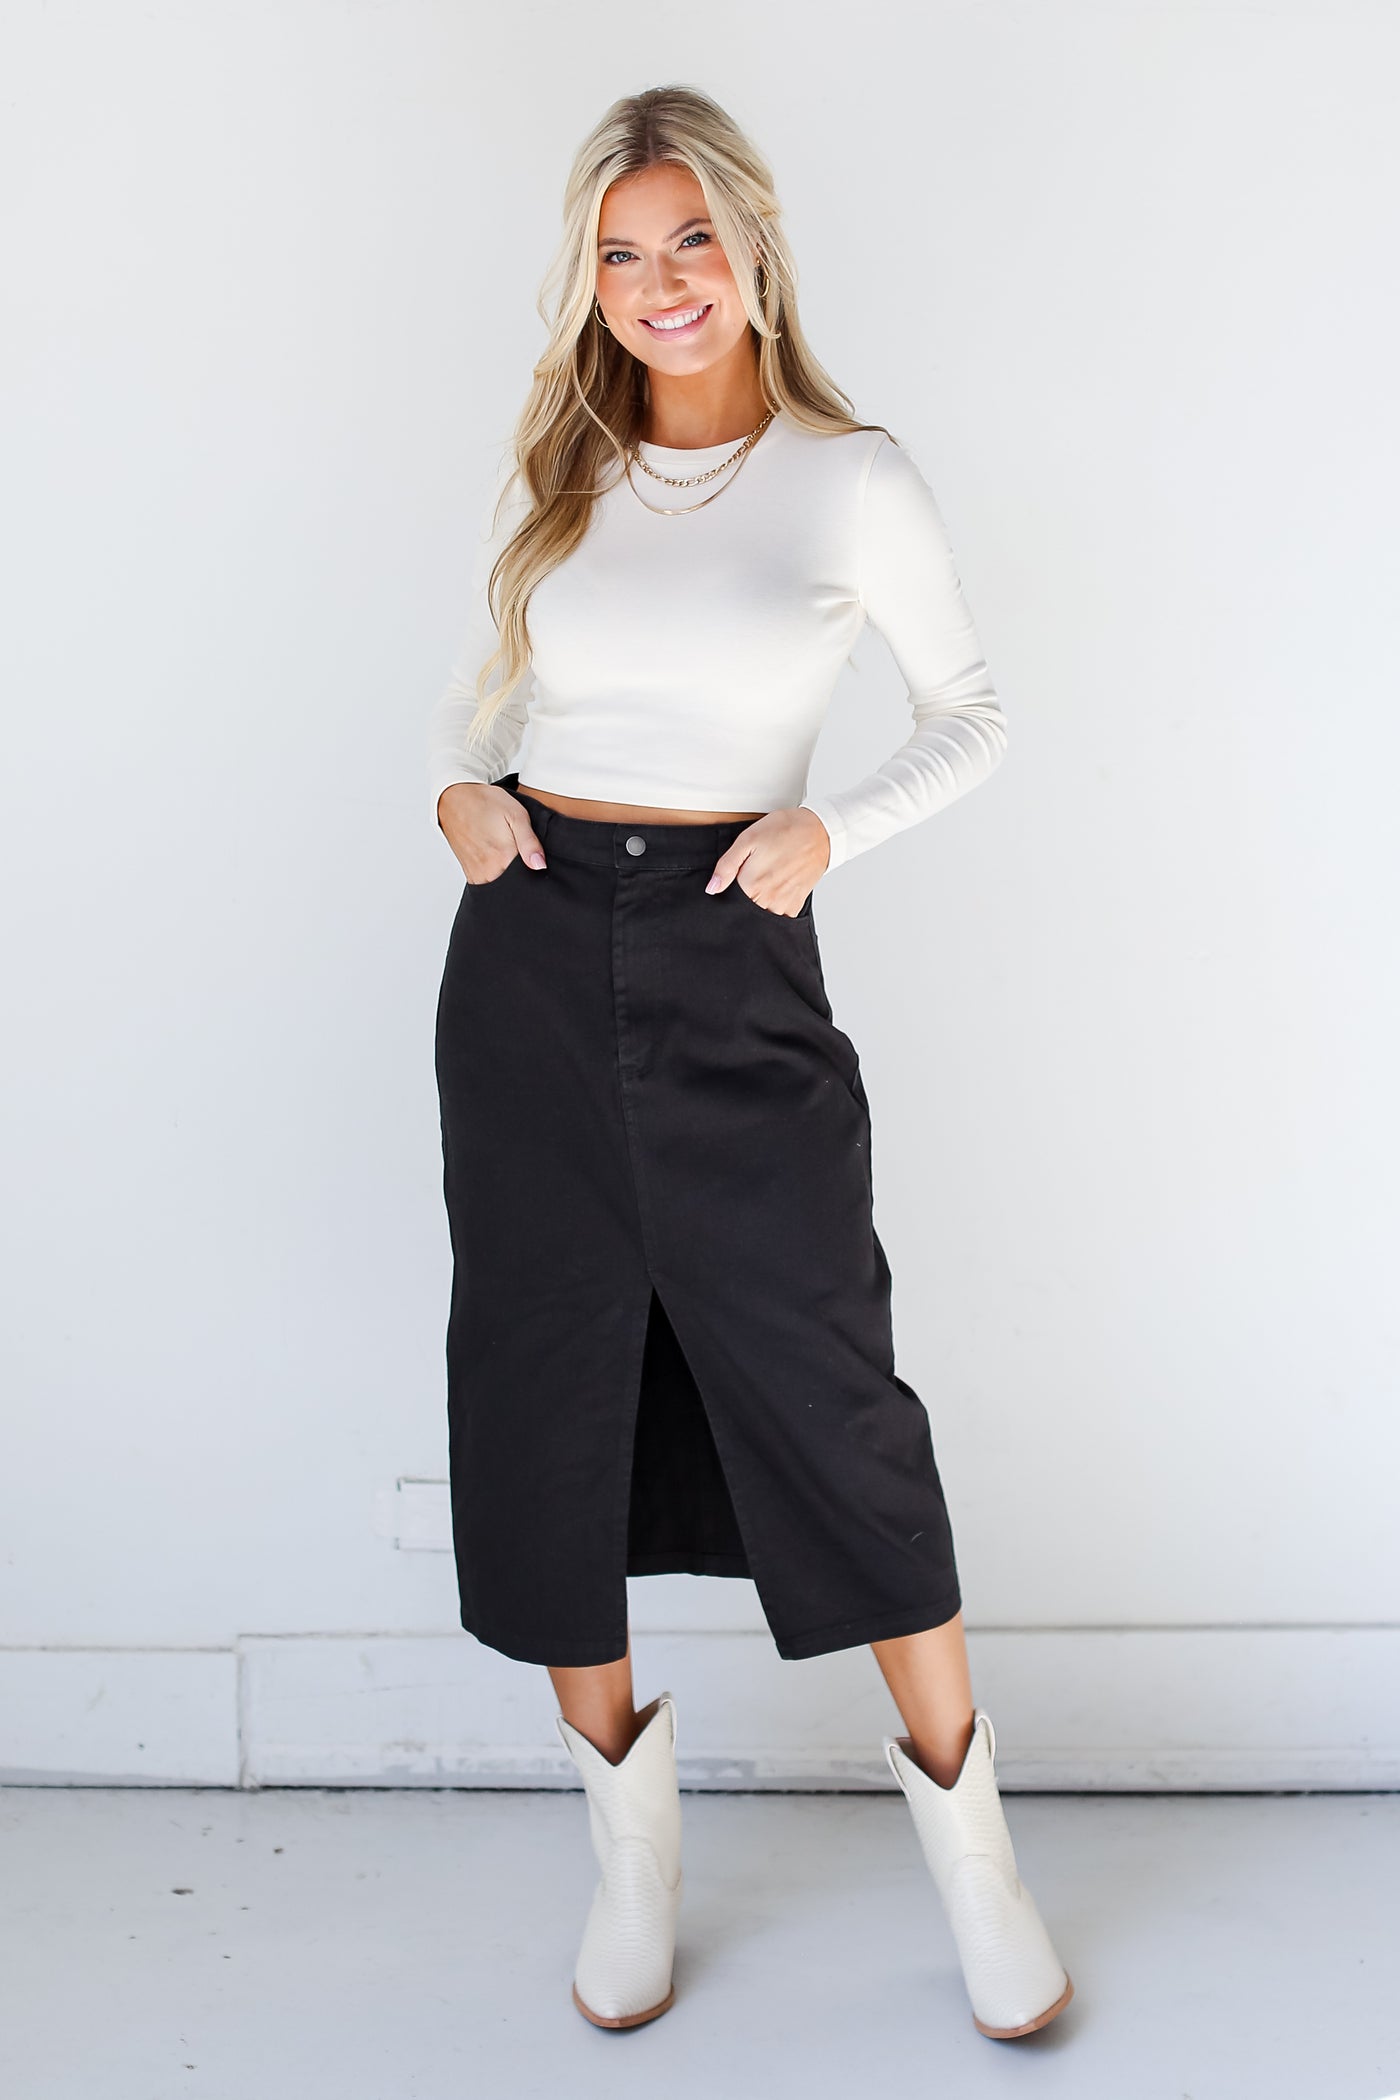 Black Denim Midi Skirt with basic white top